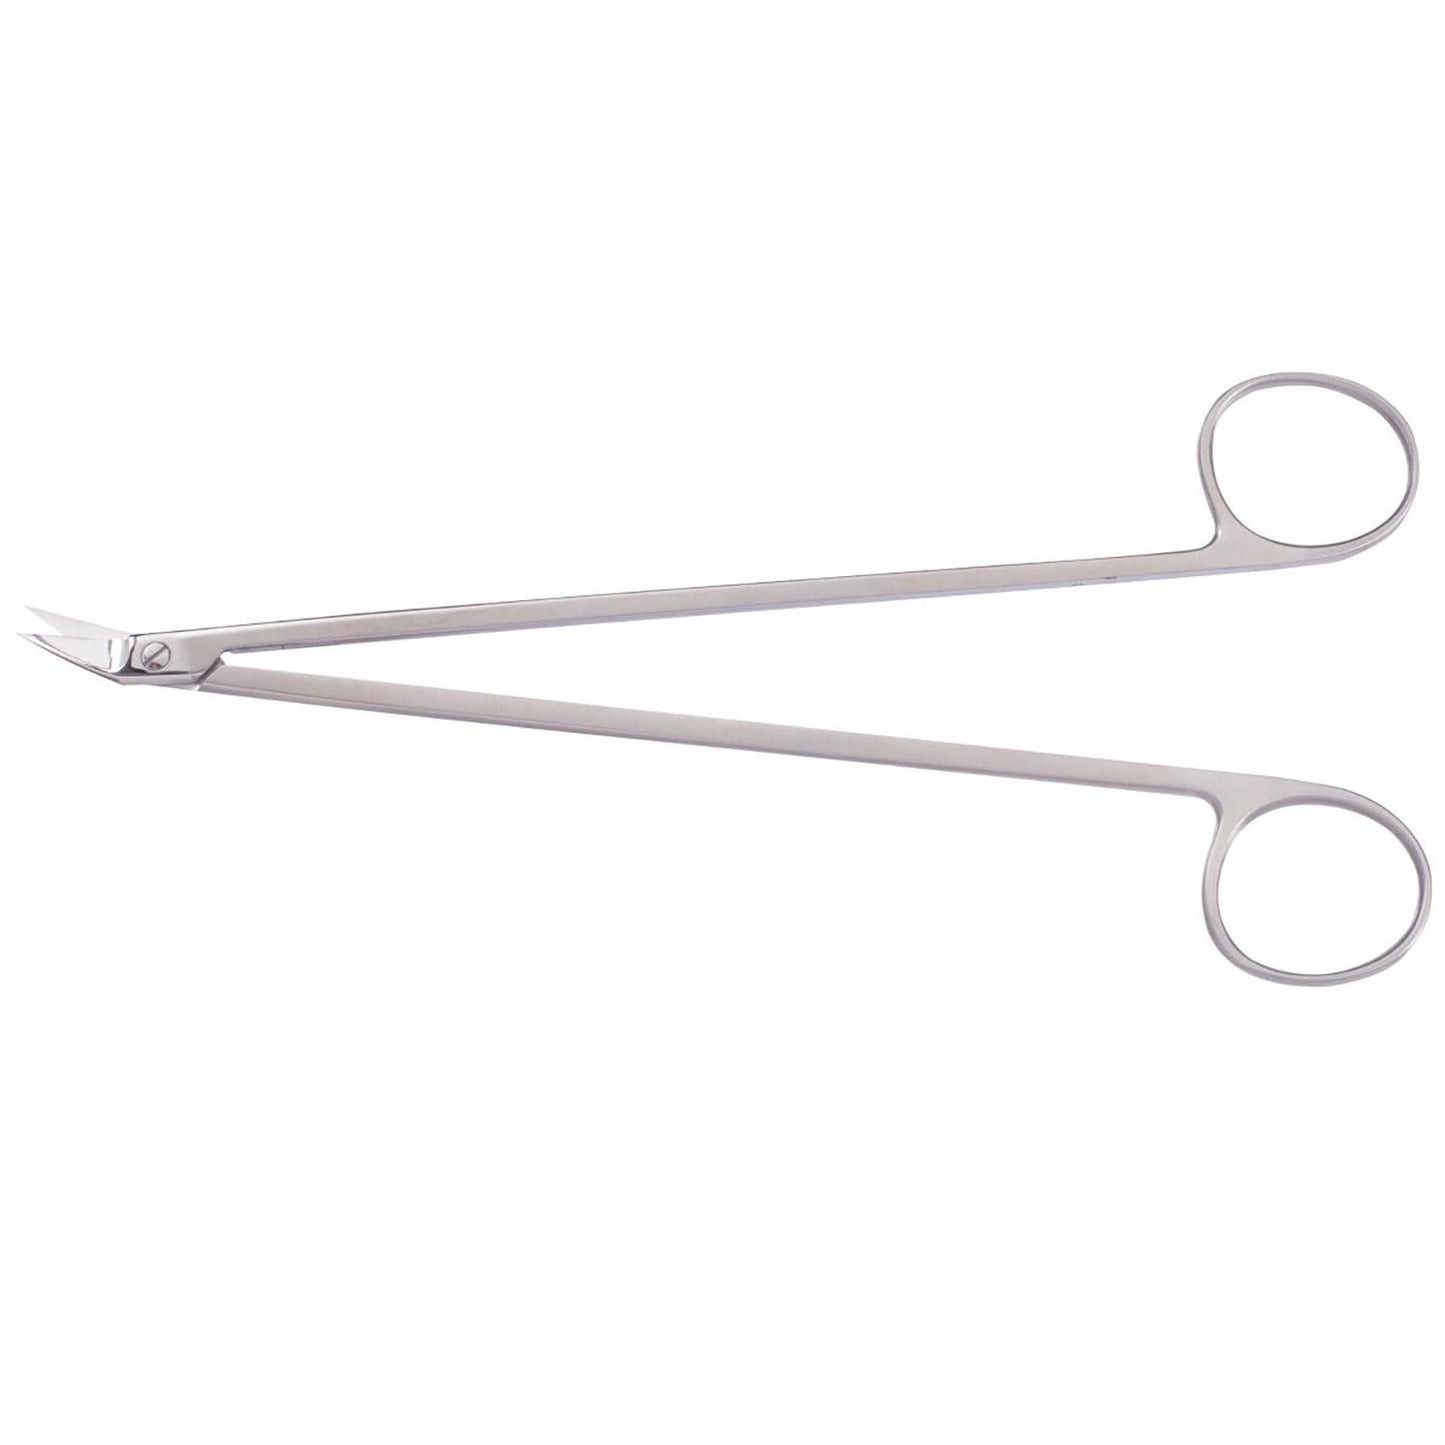 Cooley Arteriotomy Scissors